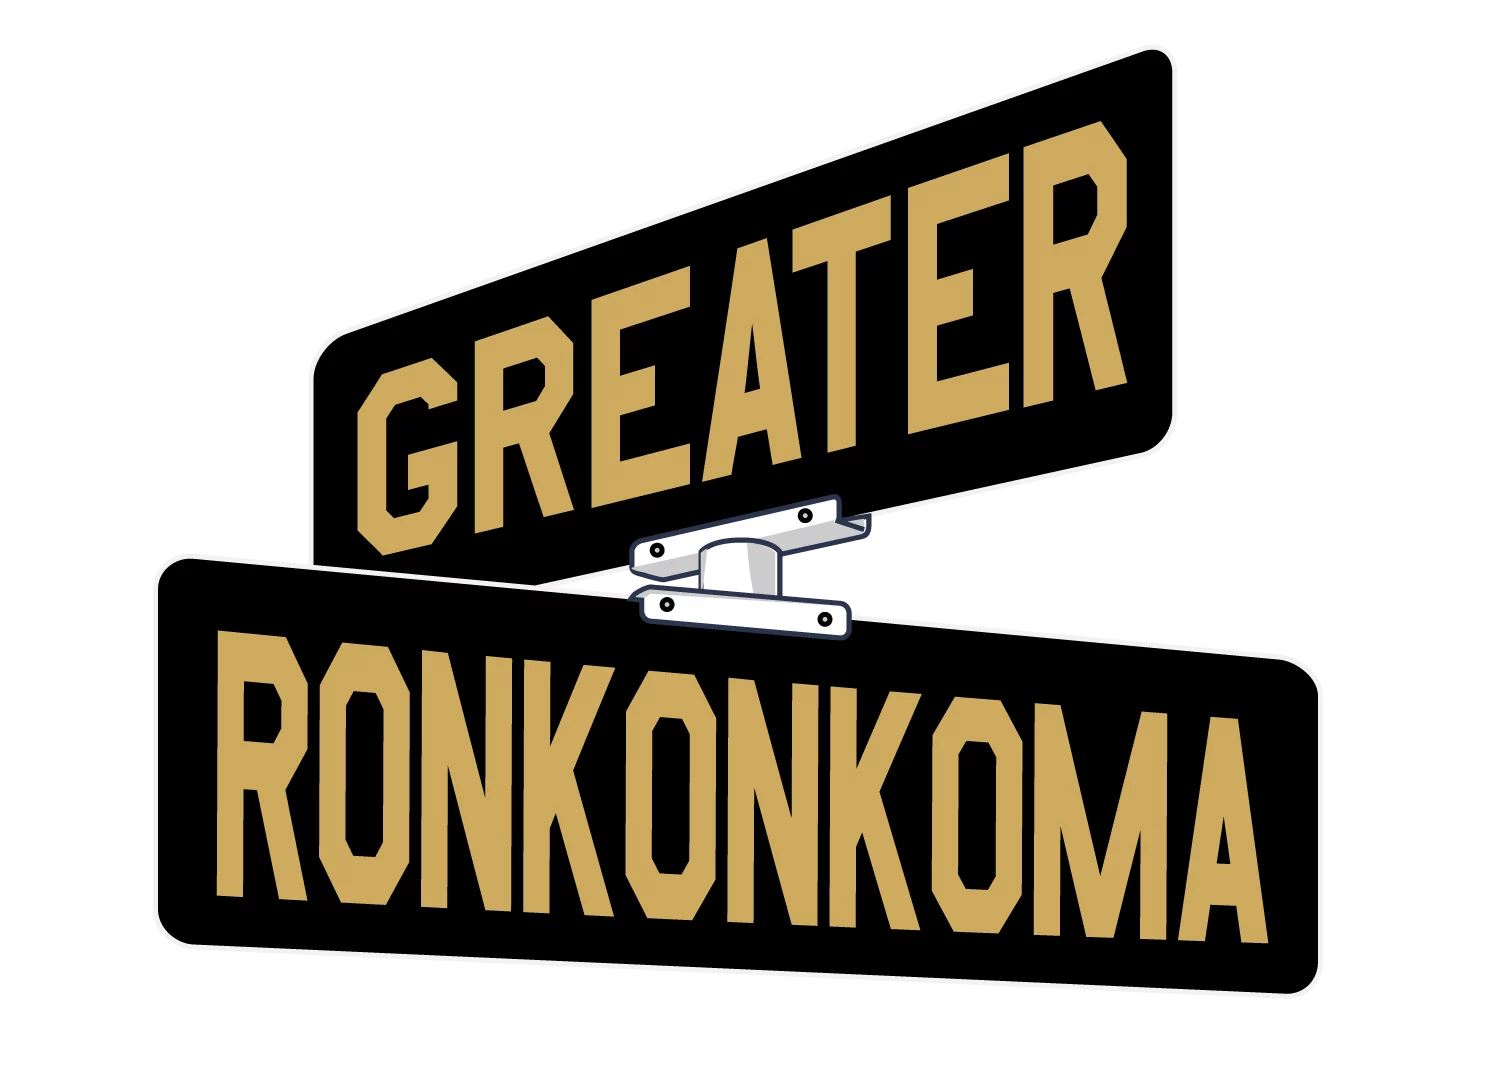 greater ronkonkoma logo